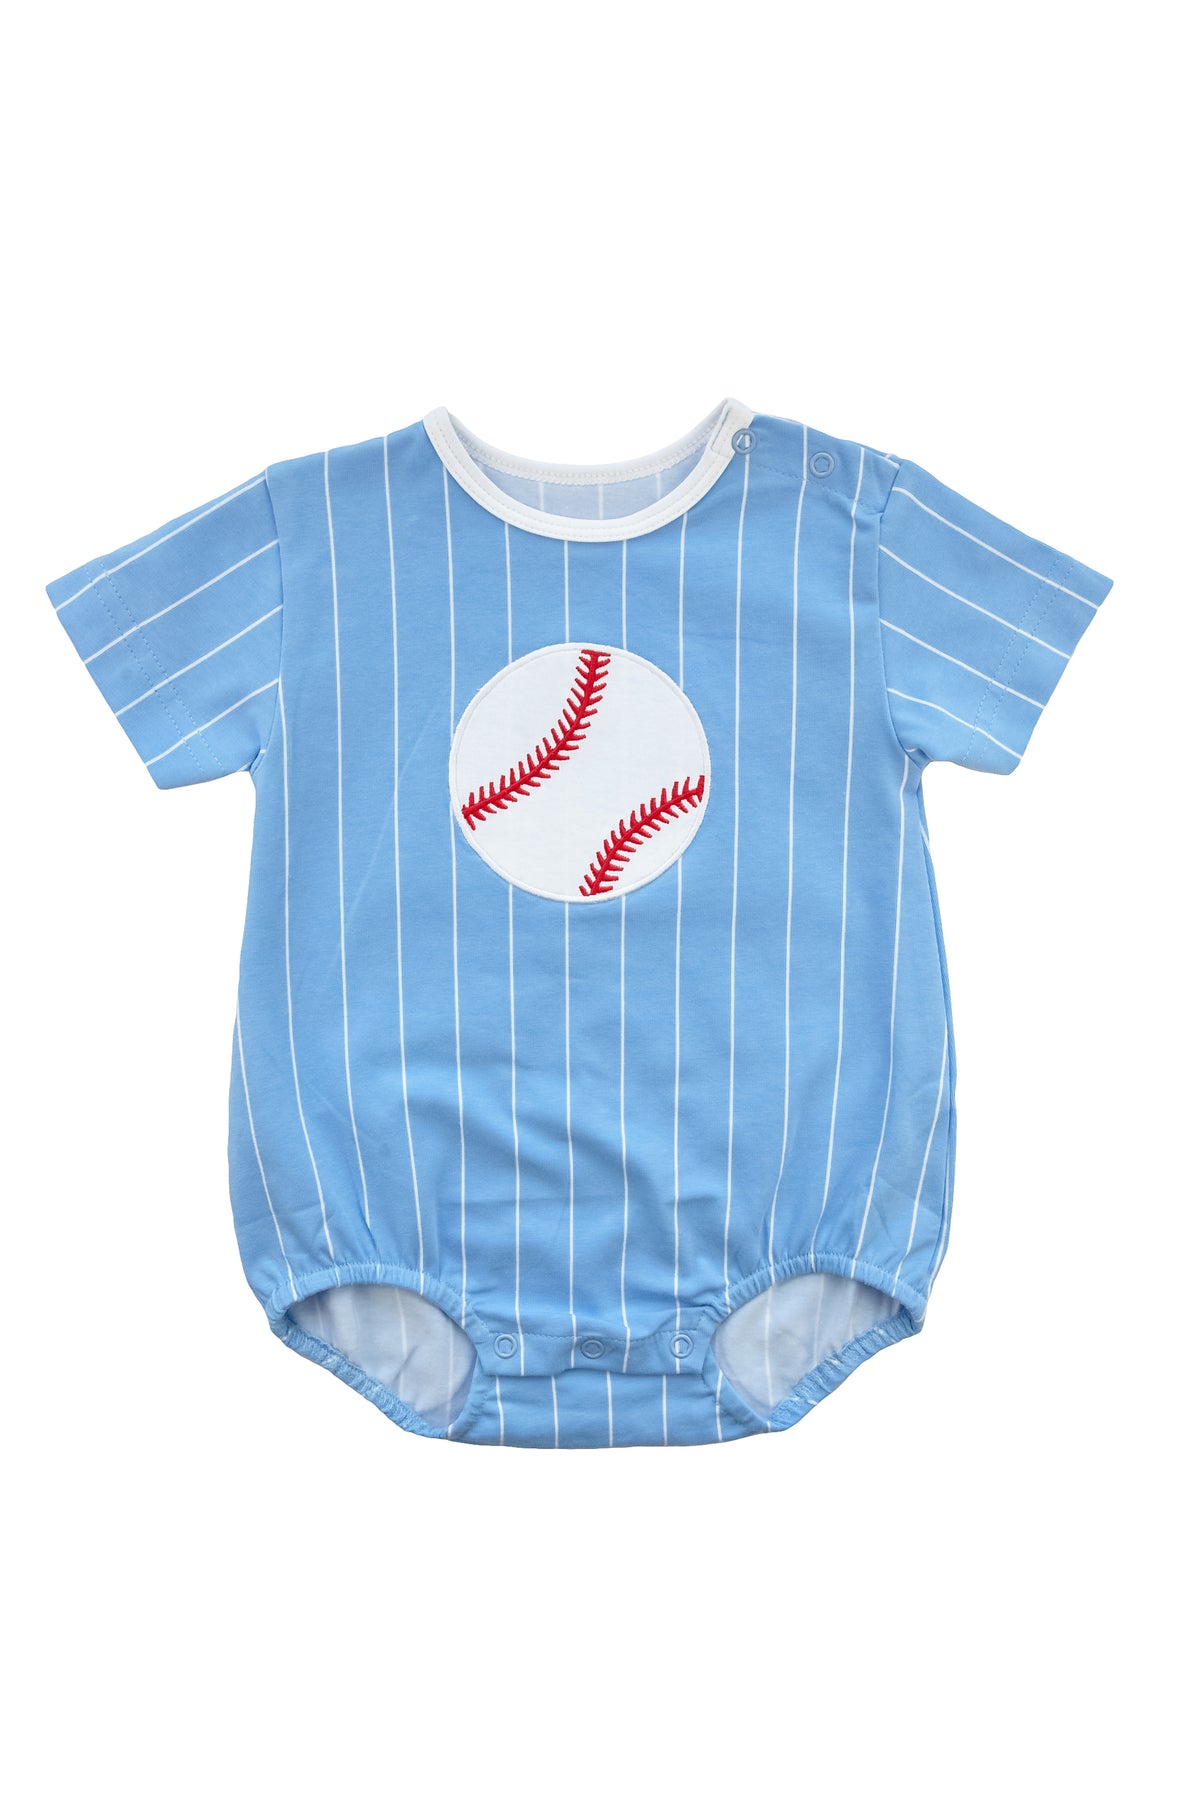 Blue Pinstripe Print Bubble With Baseball – Florence Eiseman